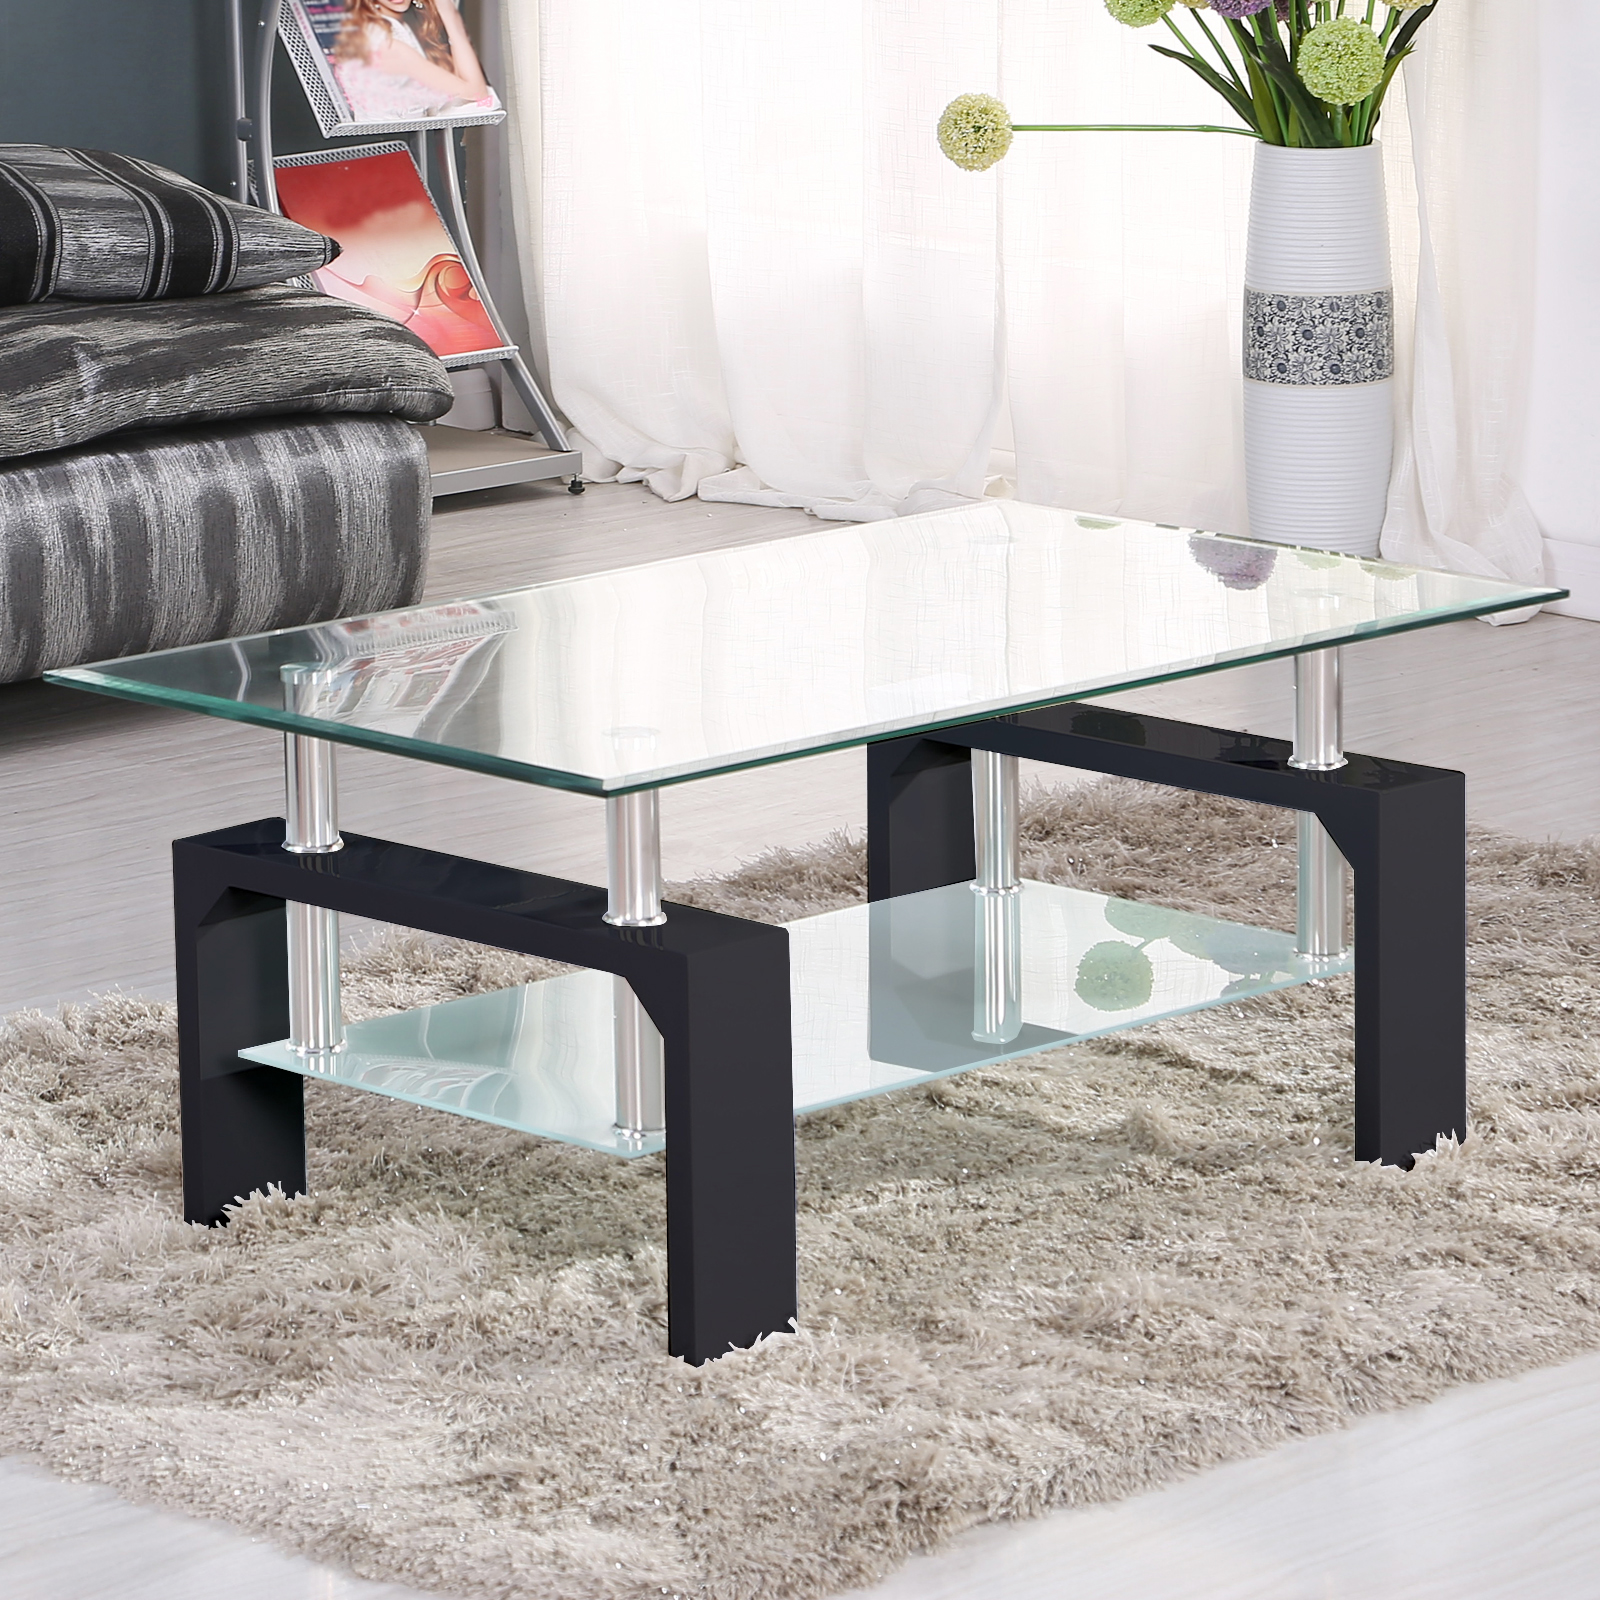 Uenjoy Rectangular Glass Coffee Table Shelf Chrome Black Wood Living Room Furniture, Black - image 3 of 8